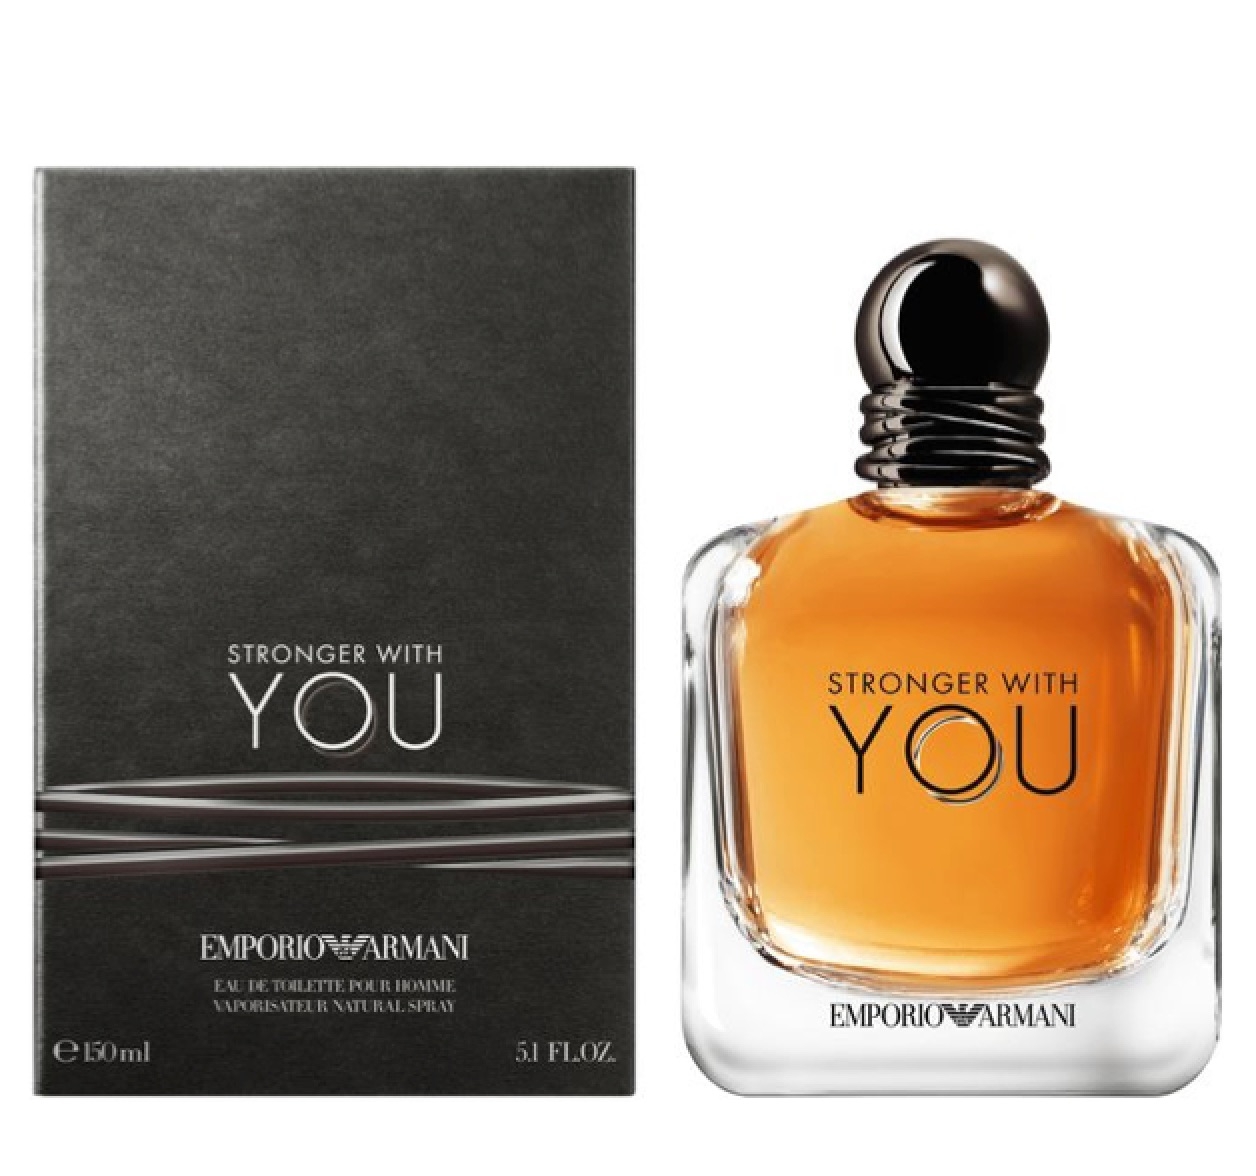 Emporio Armani Stronger With You Eau de Toilette 150ml – Perfume Essence